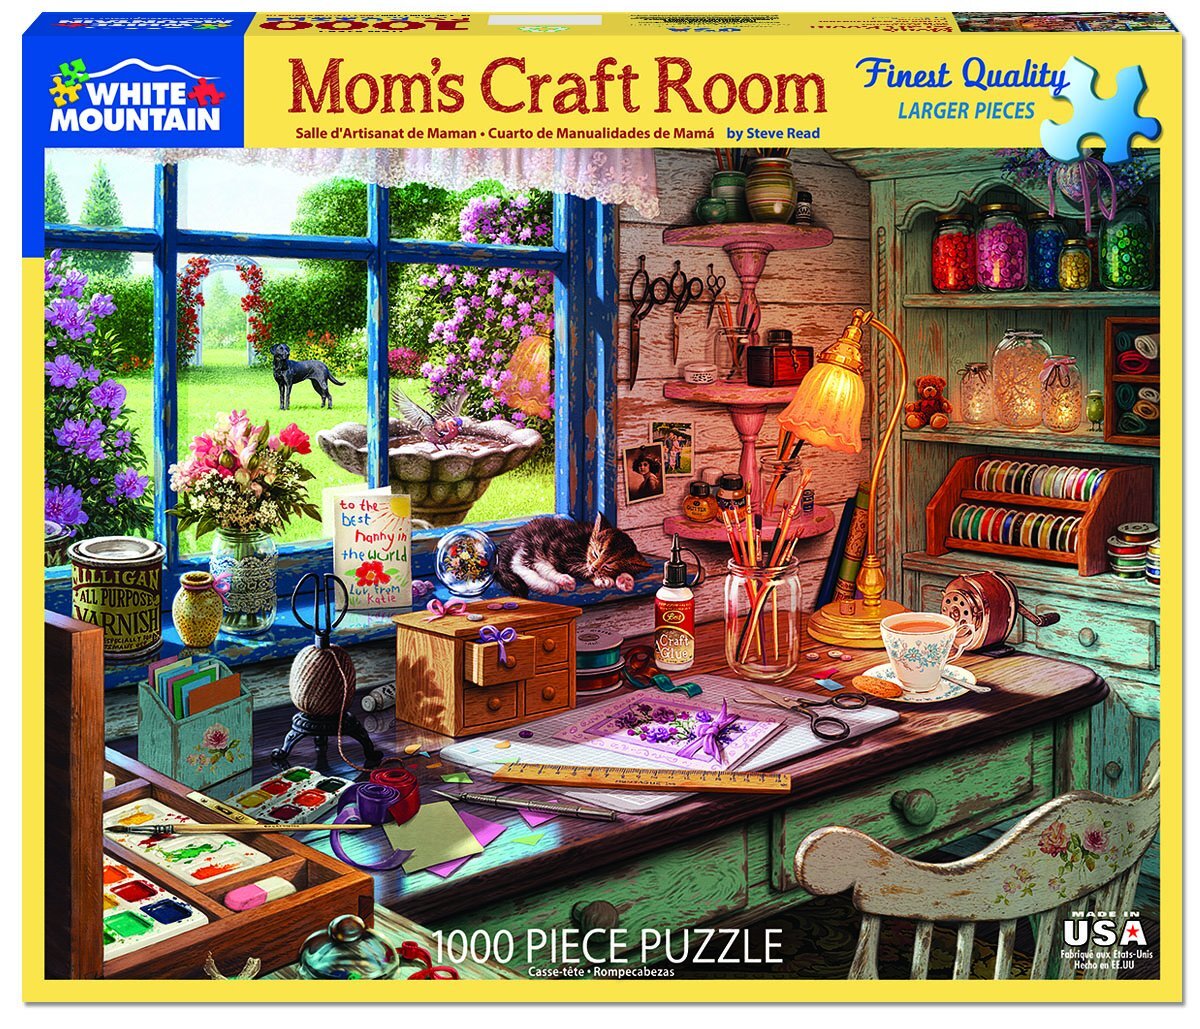 Mom’s Craft Room (1582pz) - 1000 Piece Jigsaw Puzzle